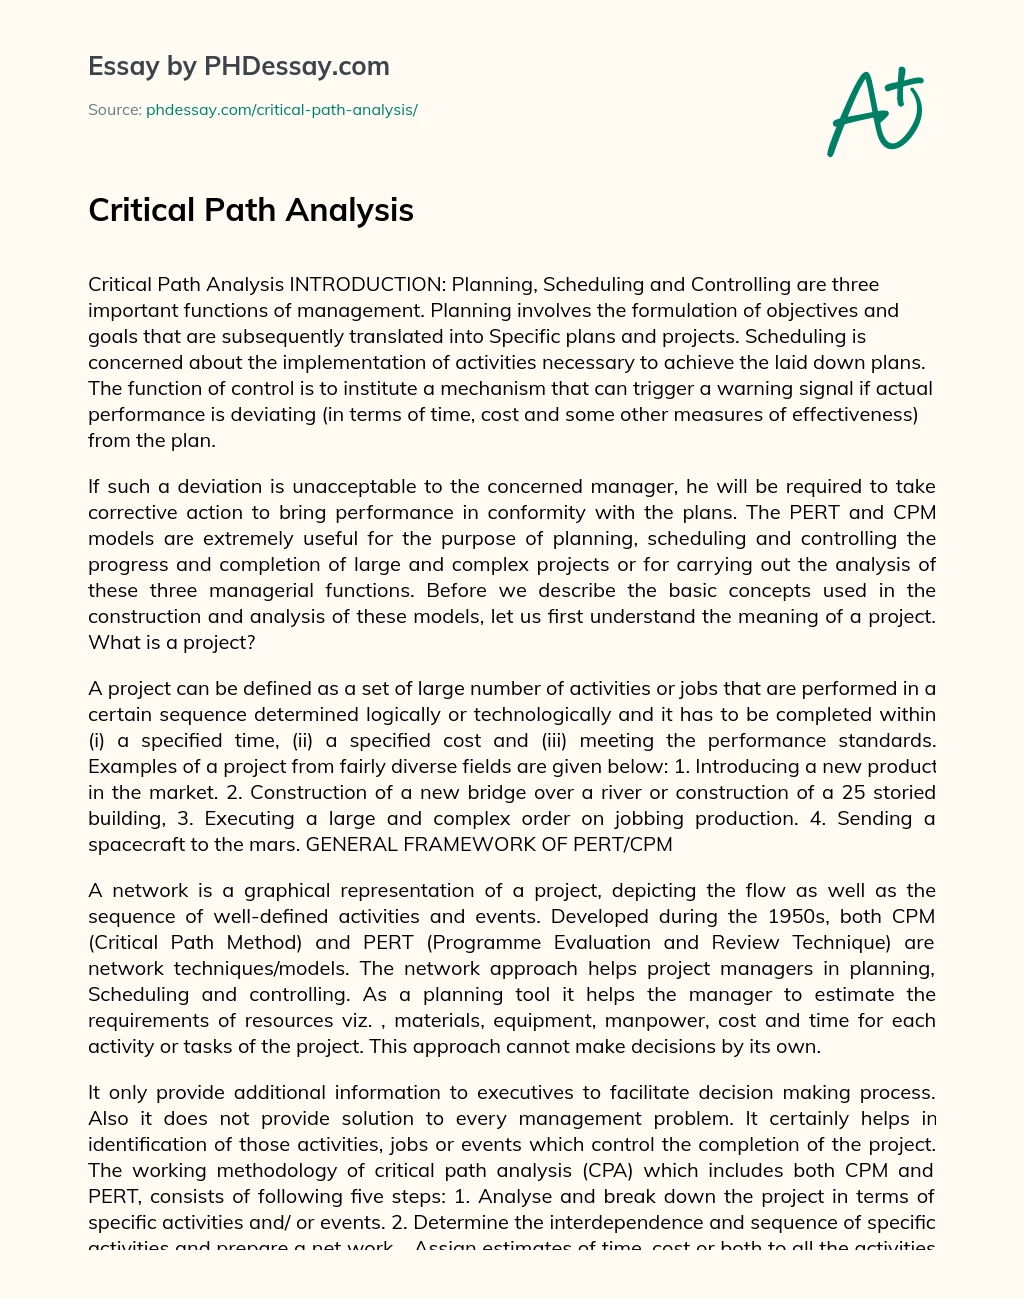 Critical Path Analysis essay